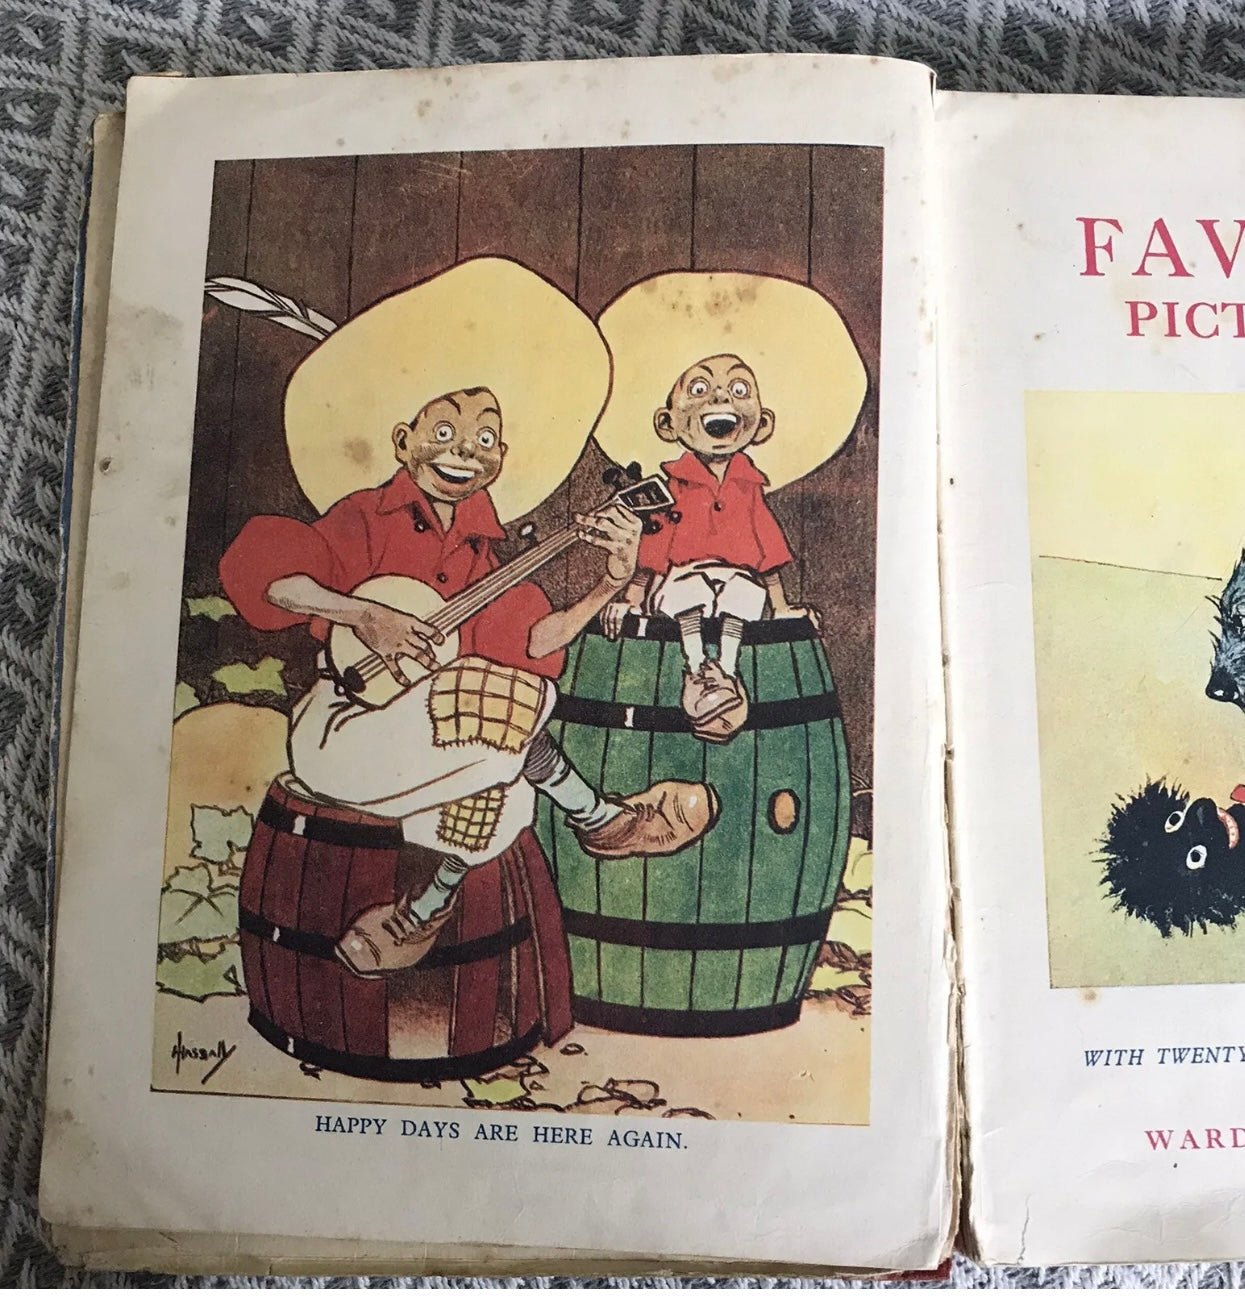 1951 Favourite Picture Book (Ernest Aris, John Hassall Etc) Ward Lock Honeyburn Books (UK)